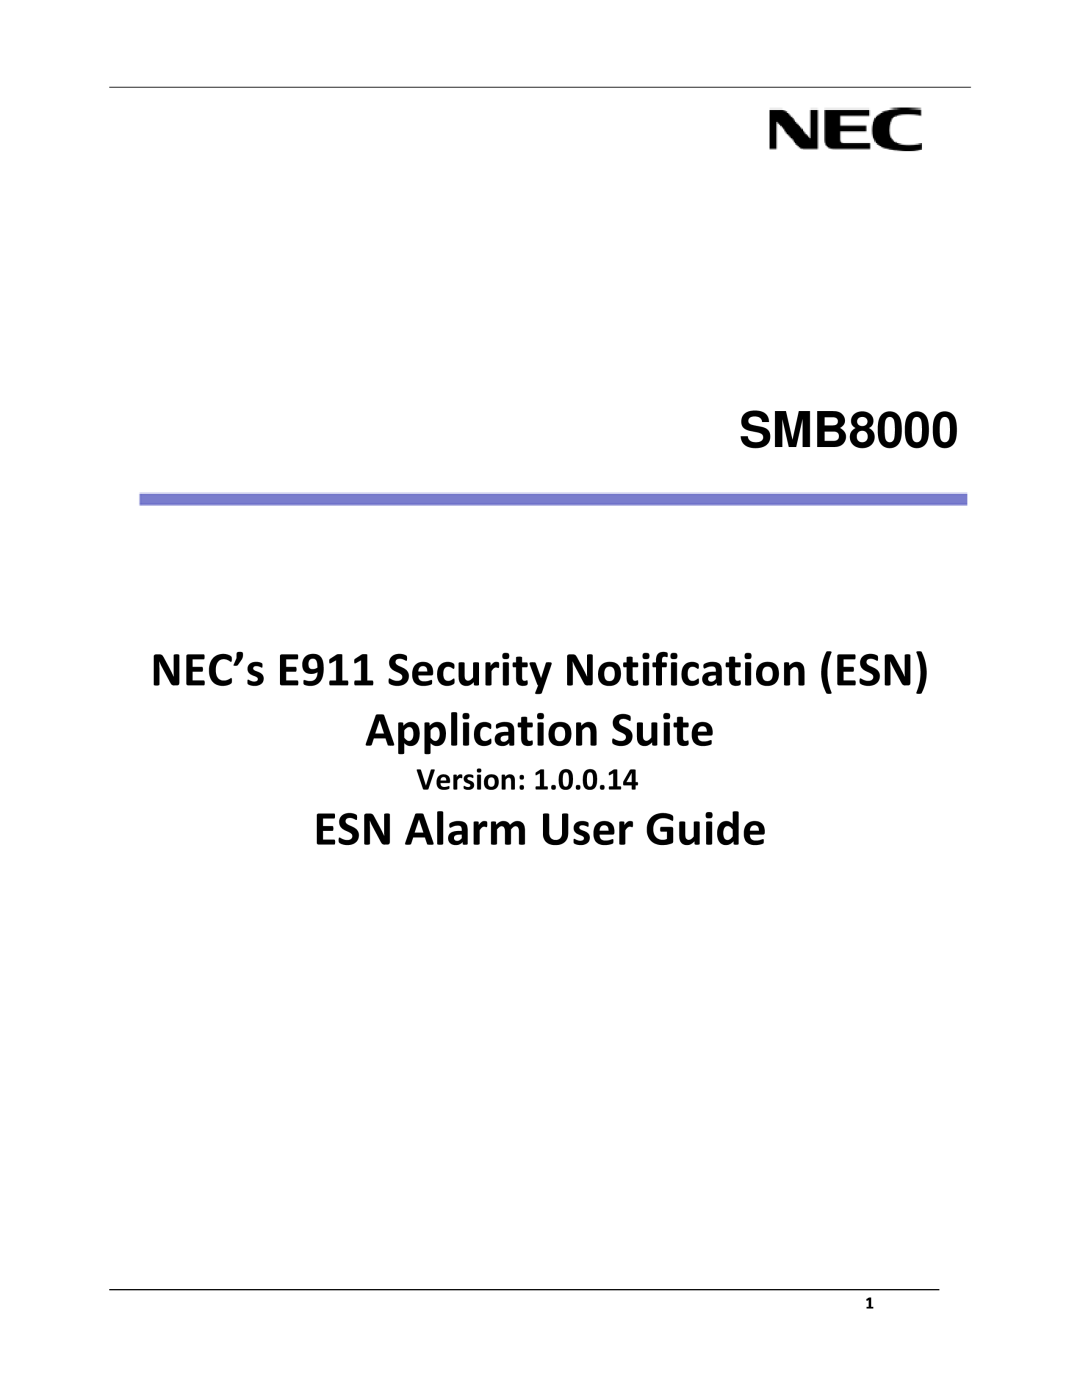 NEC SMB8000 manual Version, NEC’s E911 Security Notification ESN, Application Suite, ESN Alarm User Guide 